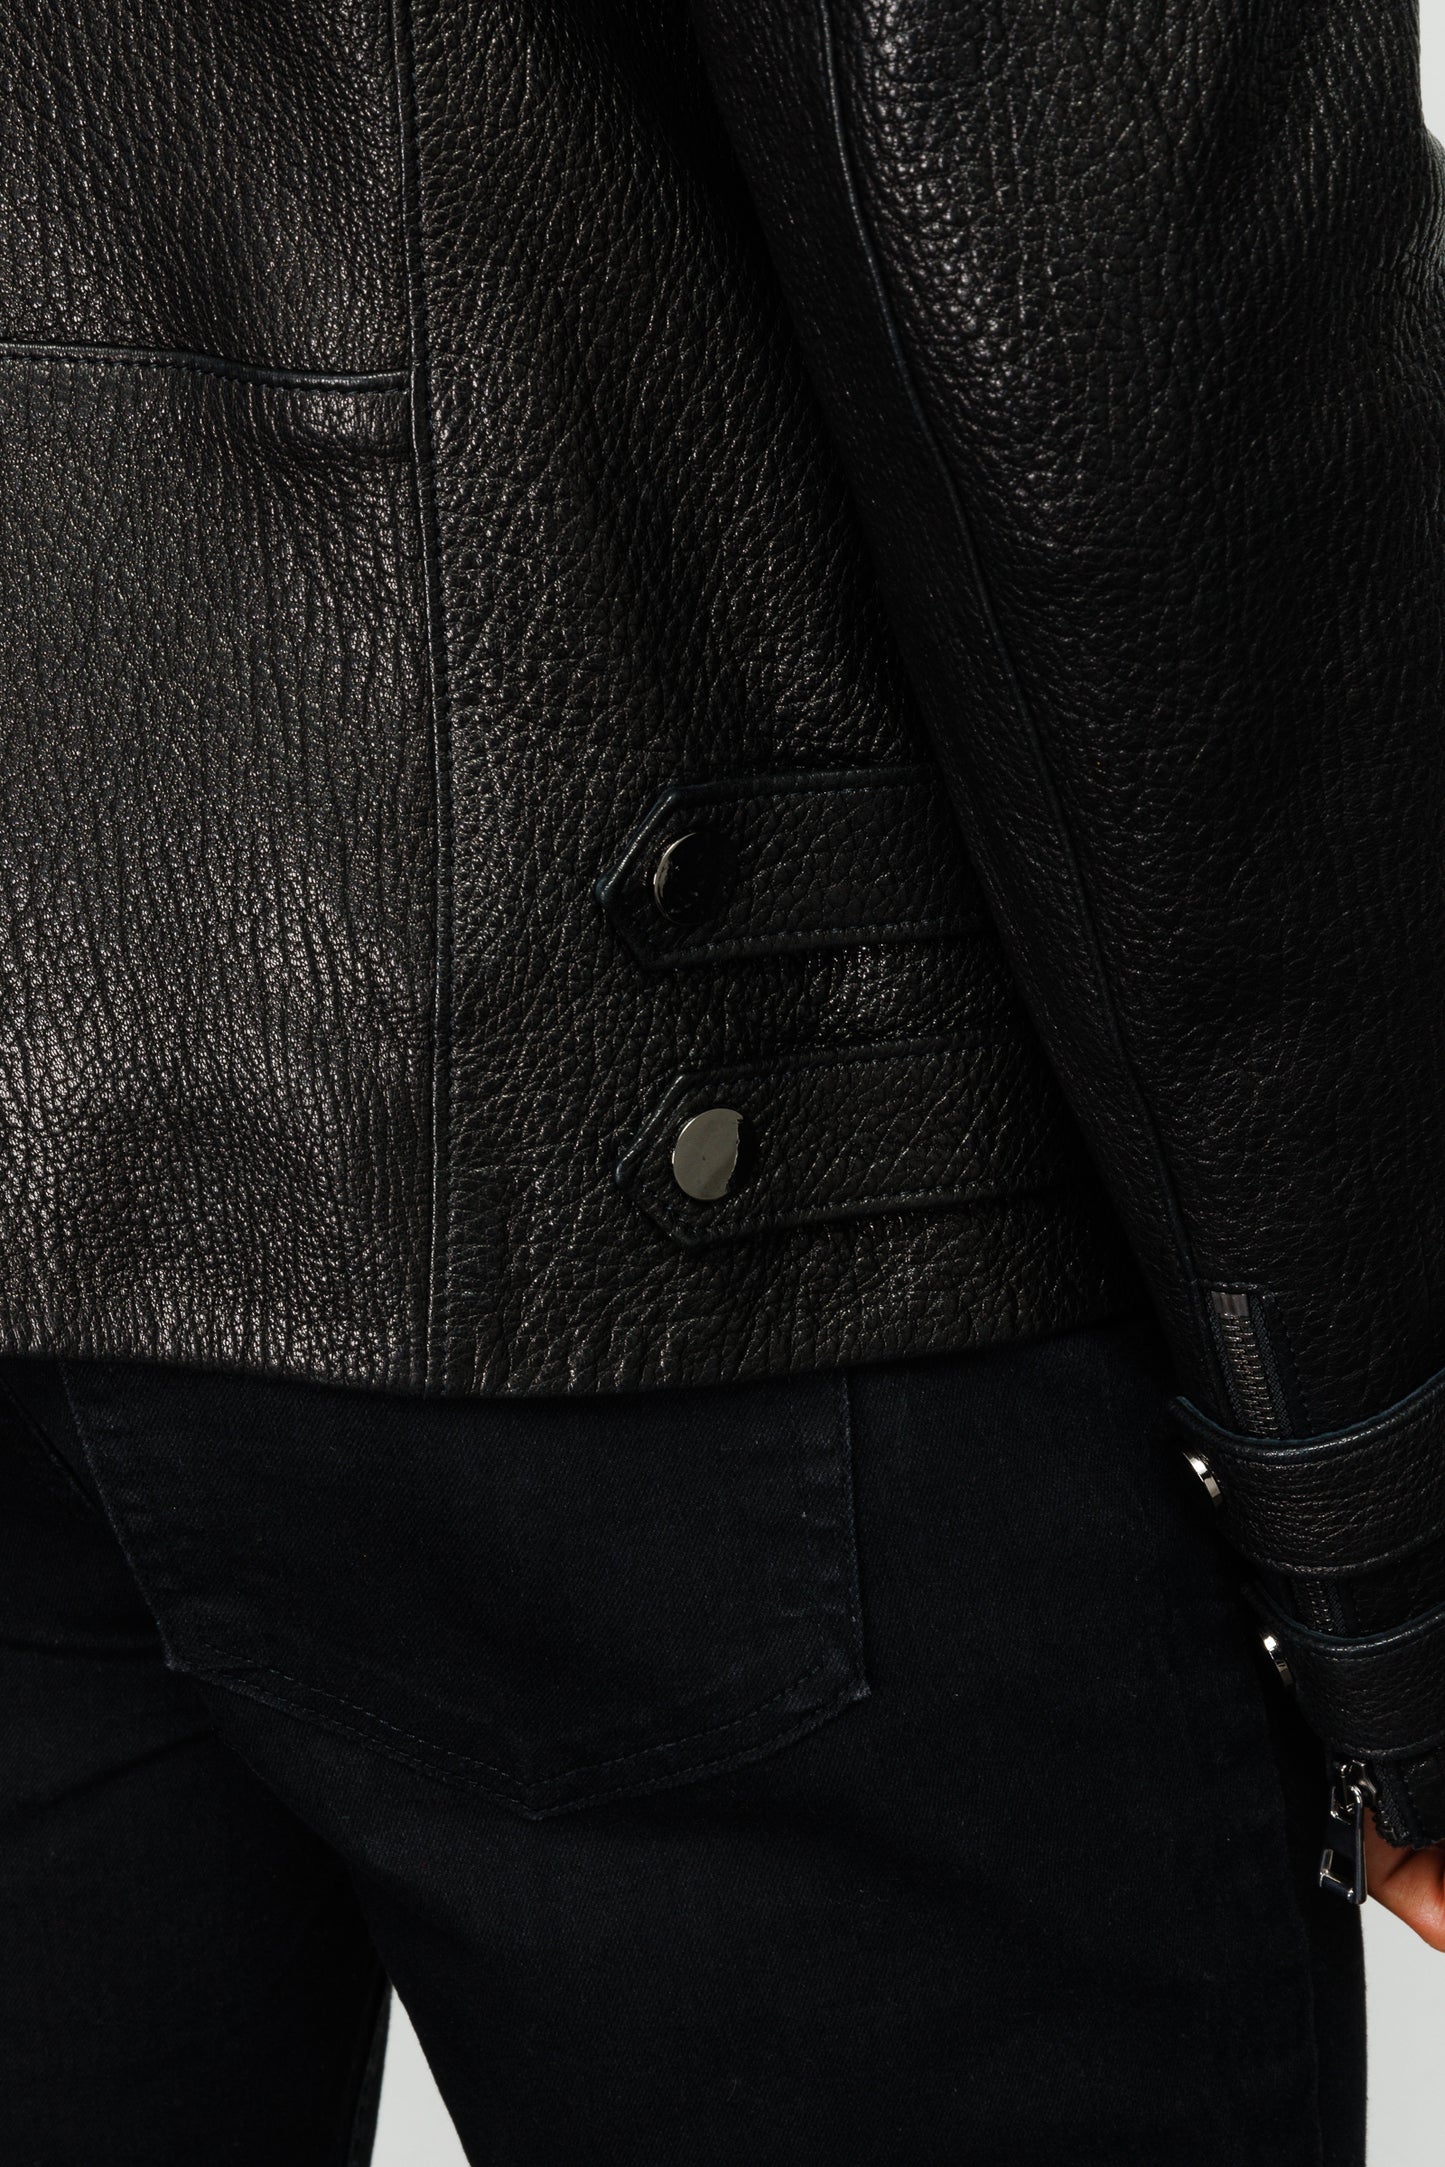 The Monala Black Leather Men Jacket